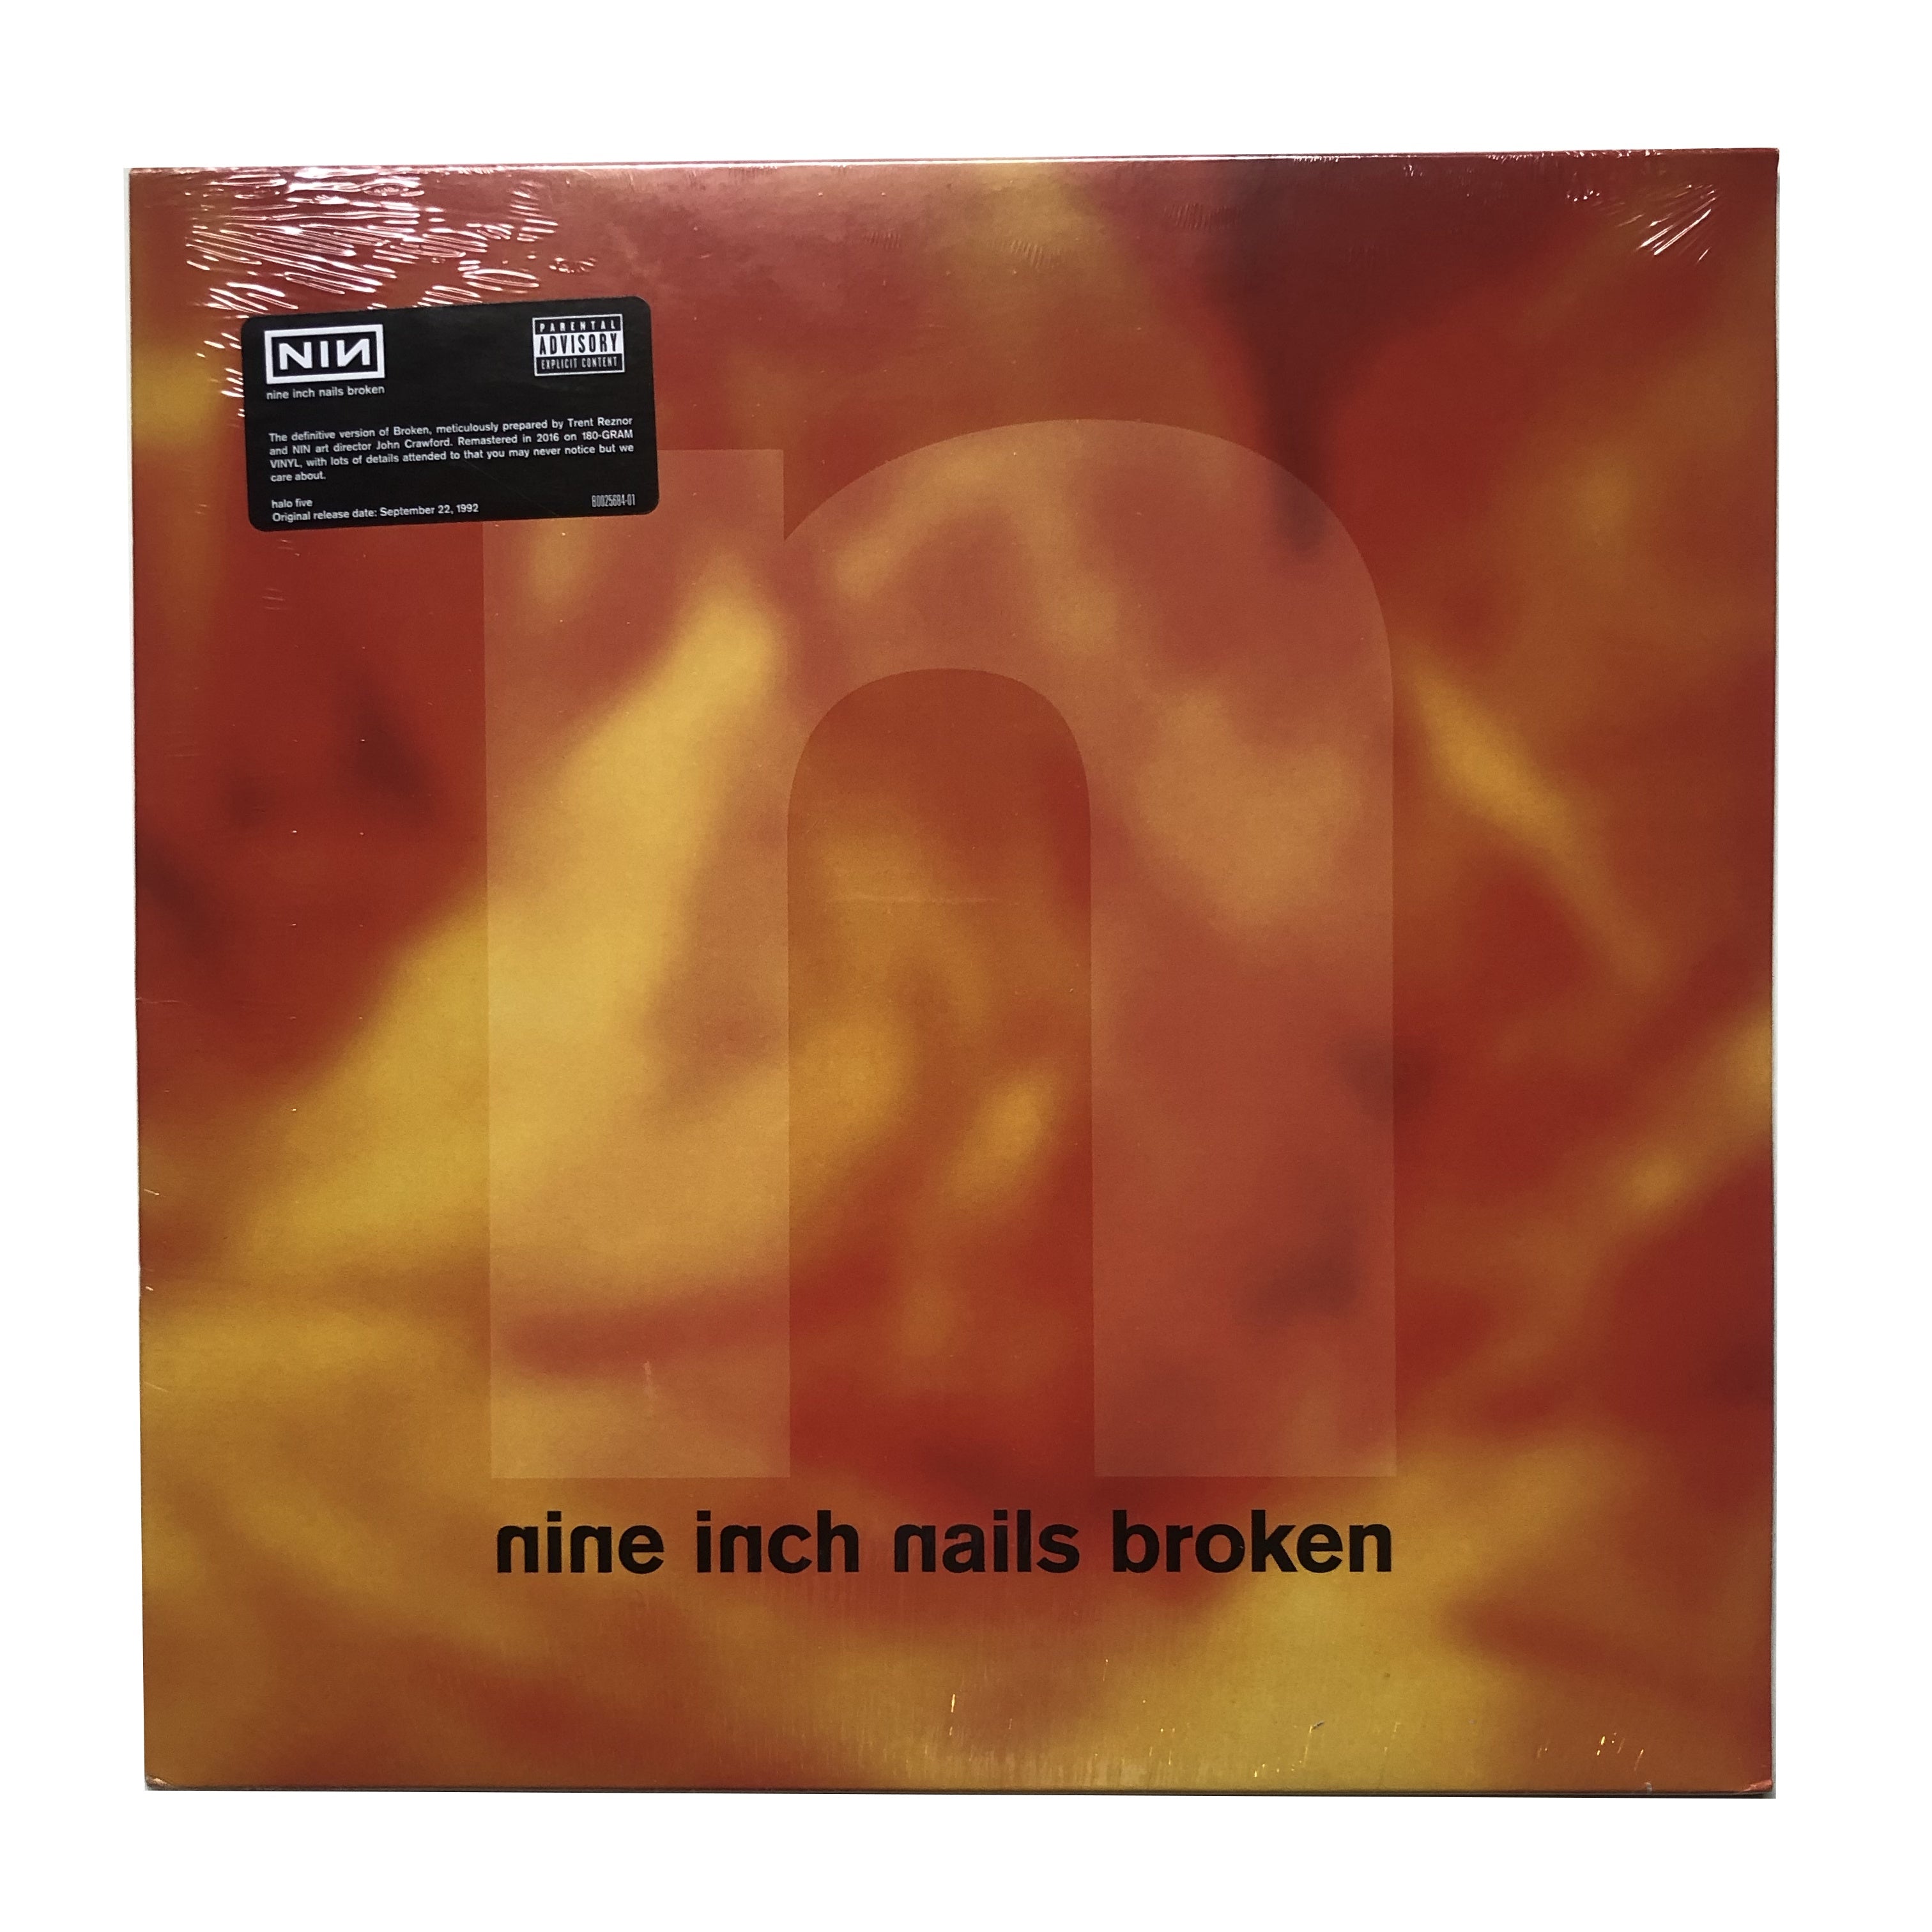 Nine Inch Nails Head Like A Hole UK CD single — RareVinyl.com